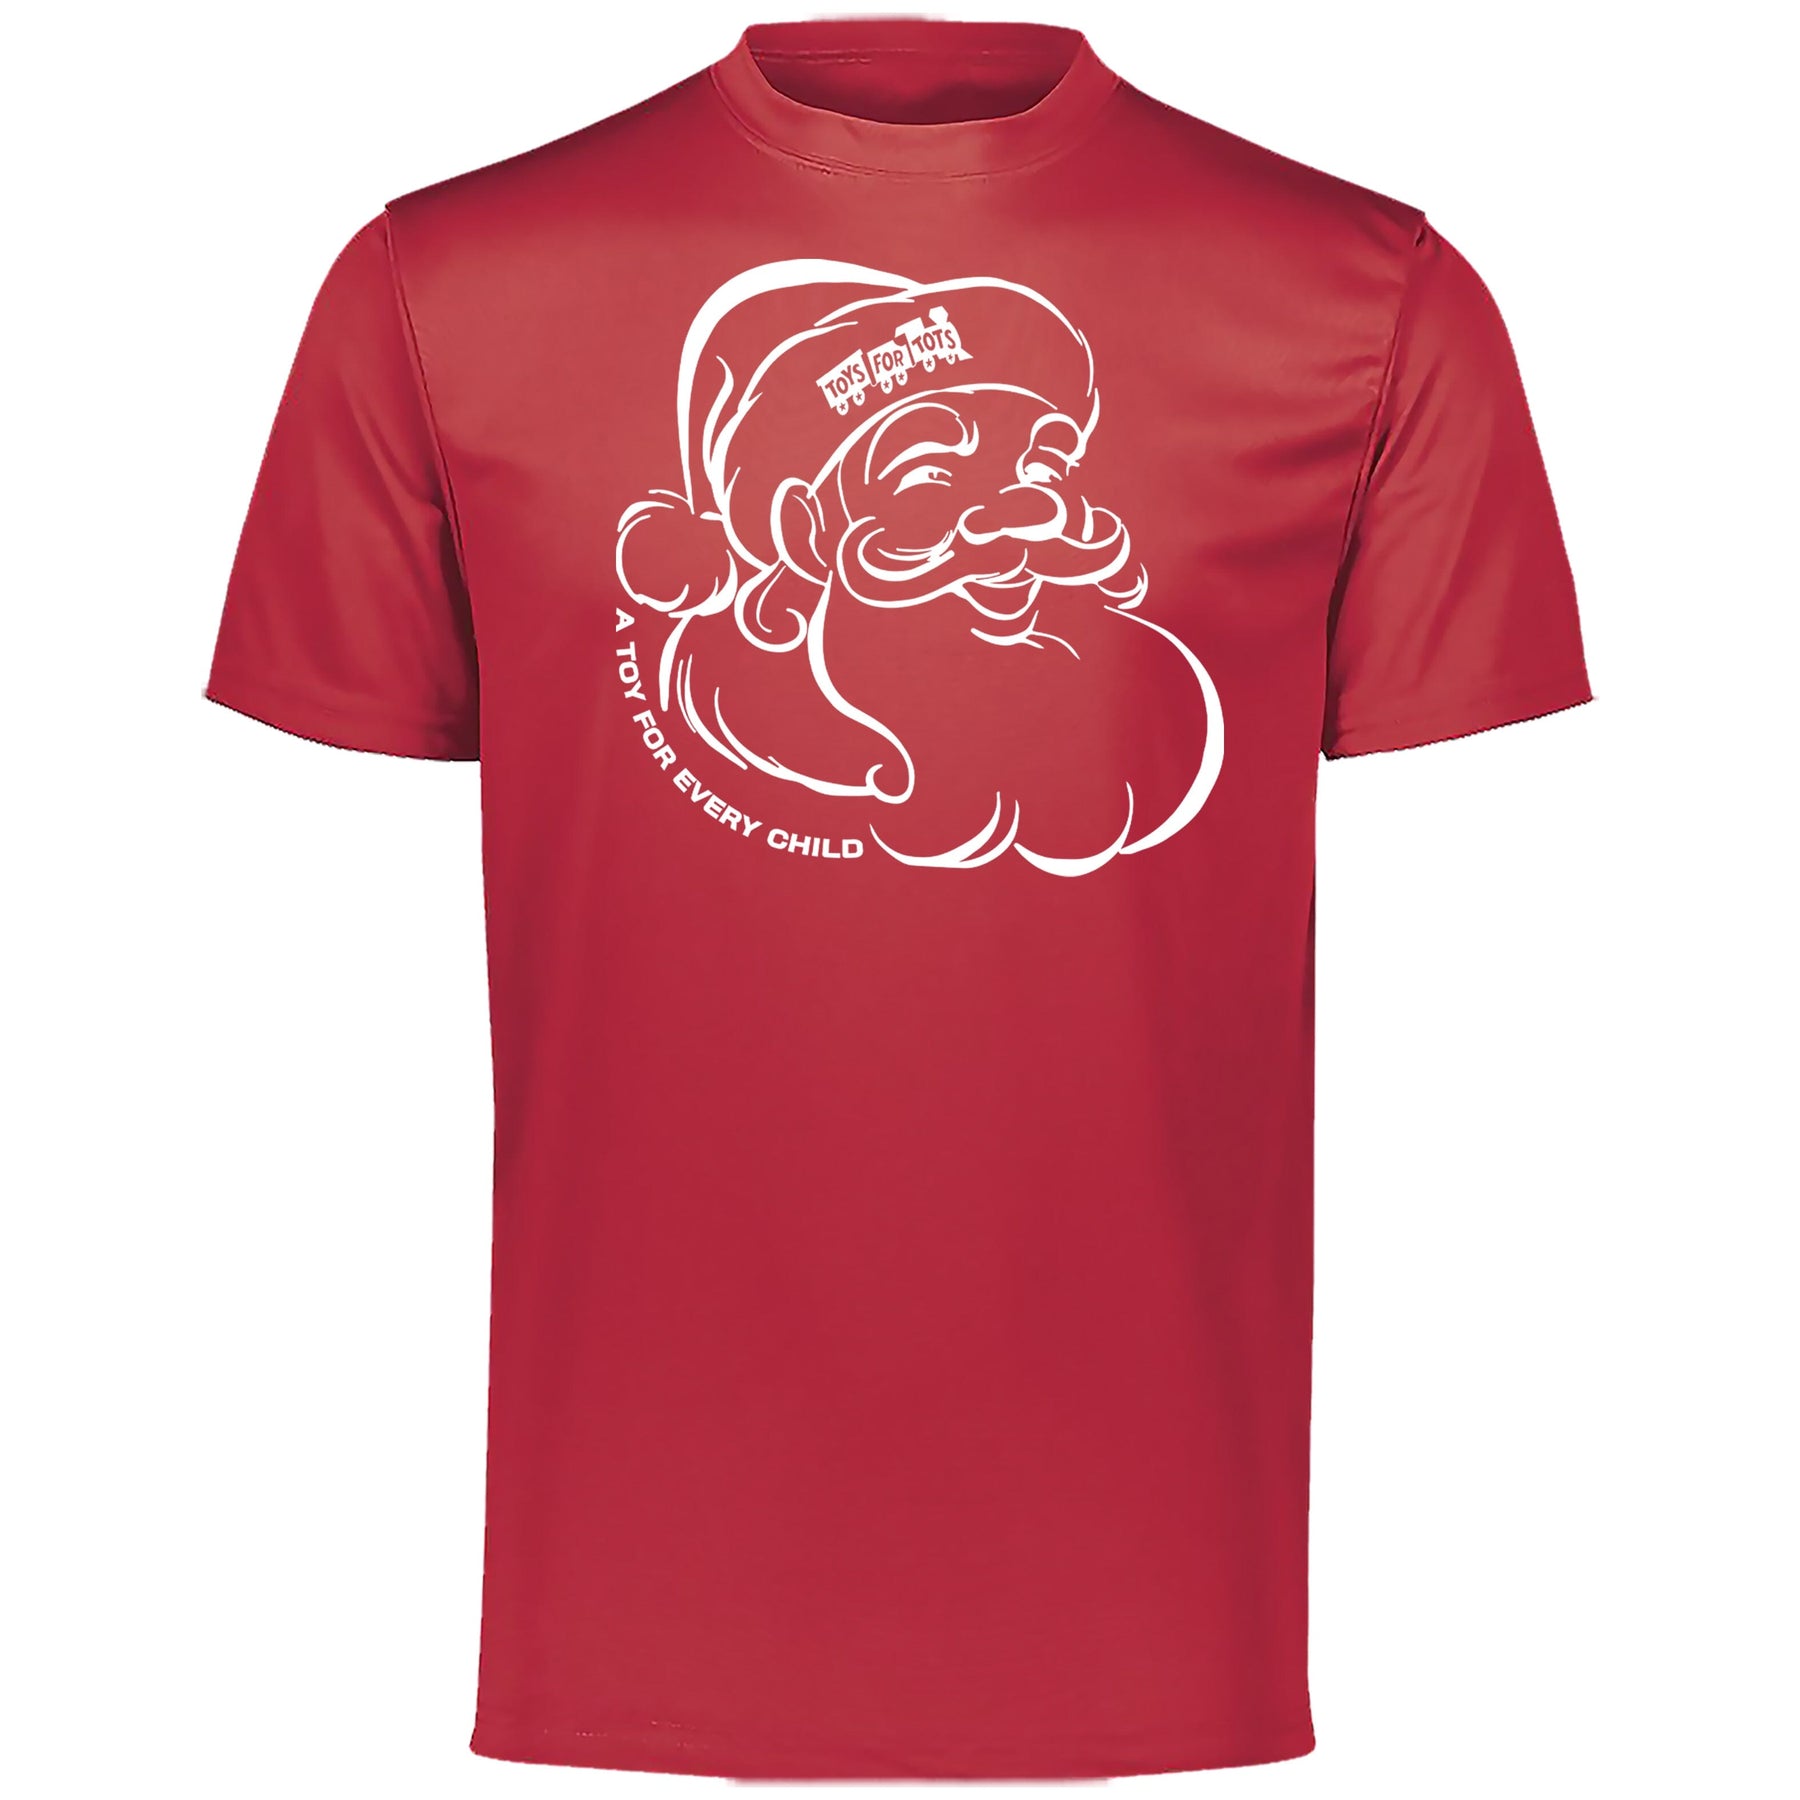 Santa TFT Dri-Fit Performance T-Shirt T-Shirt marinecorpsdirecttft S RED 